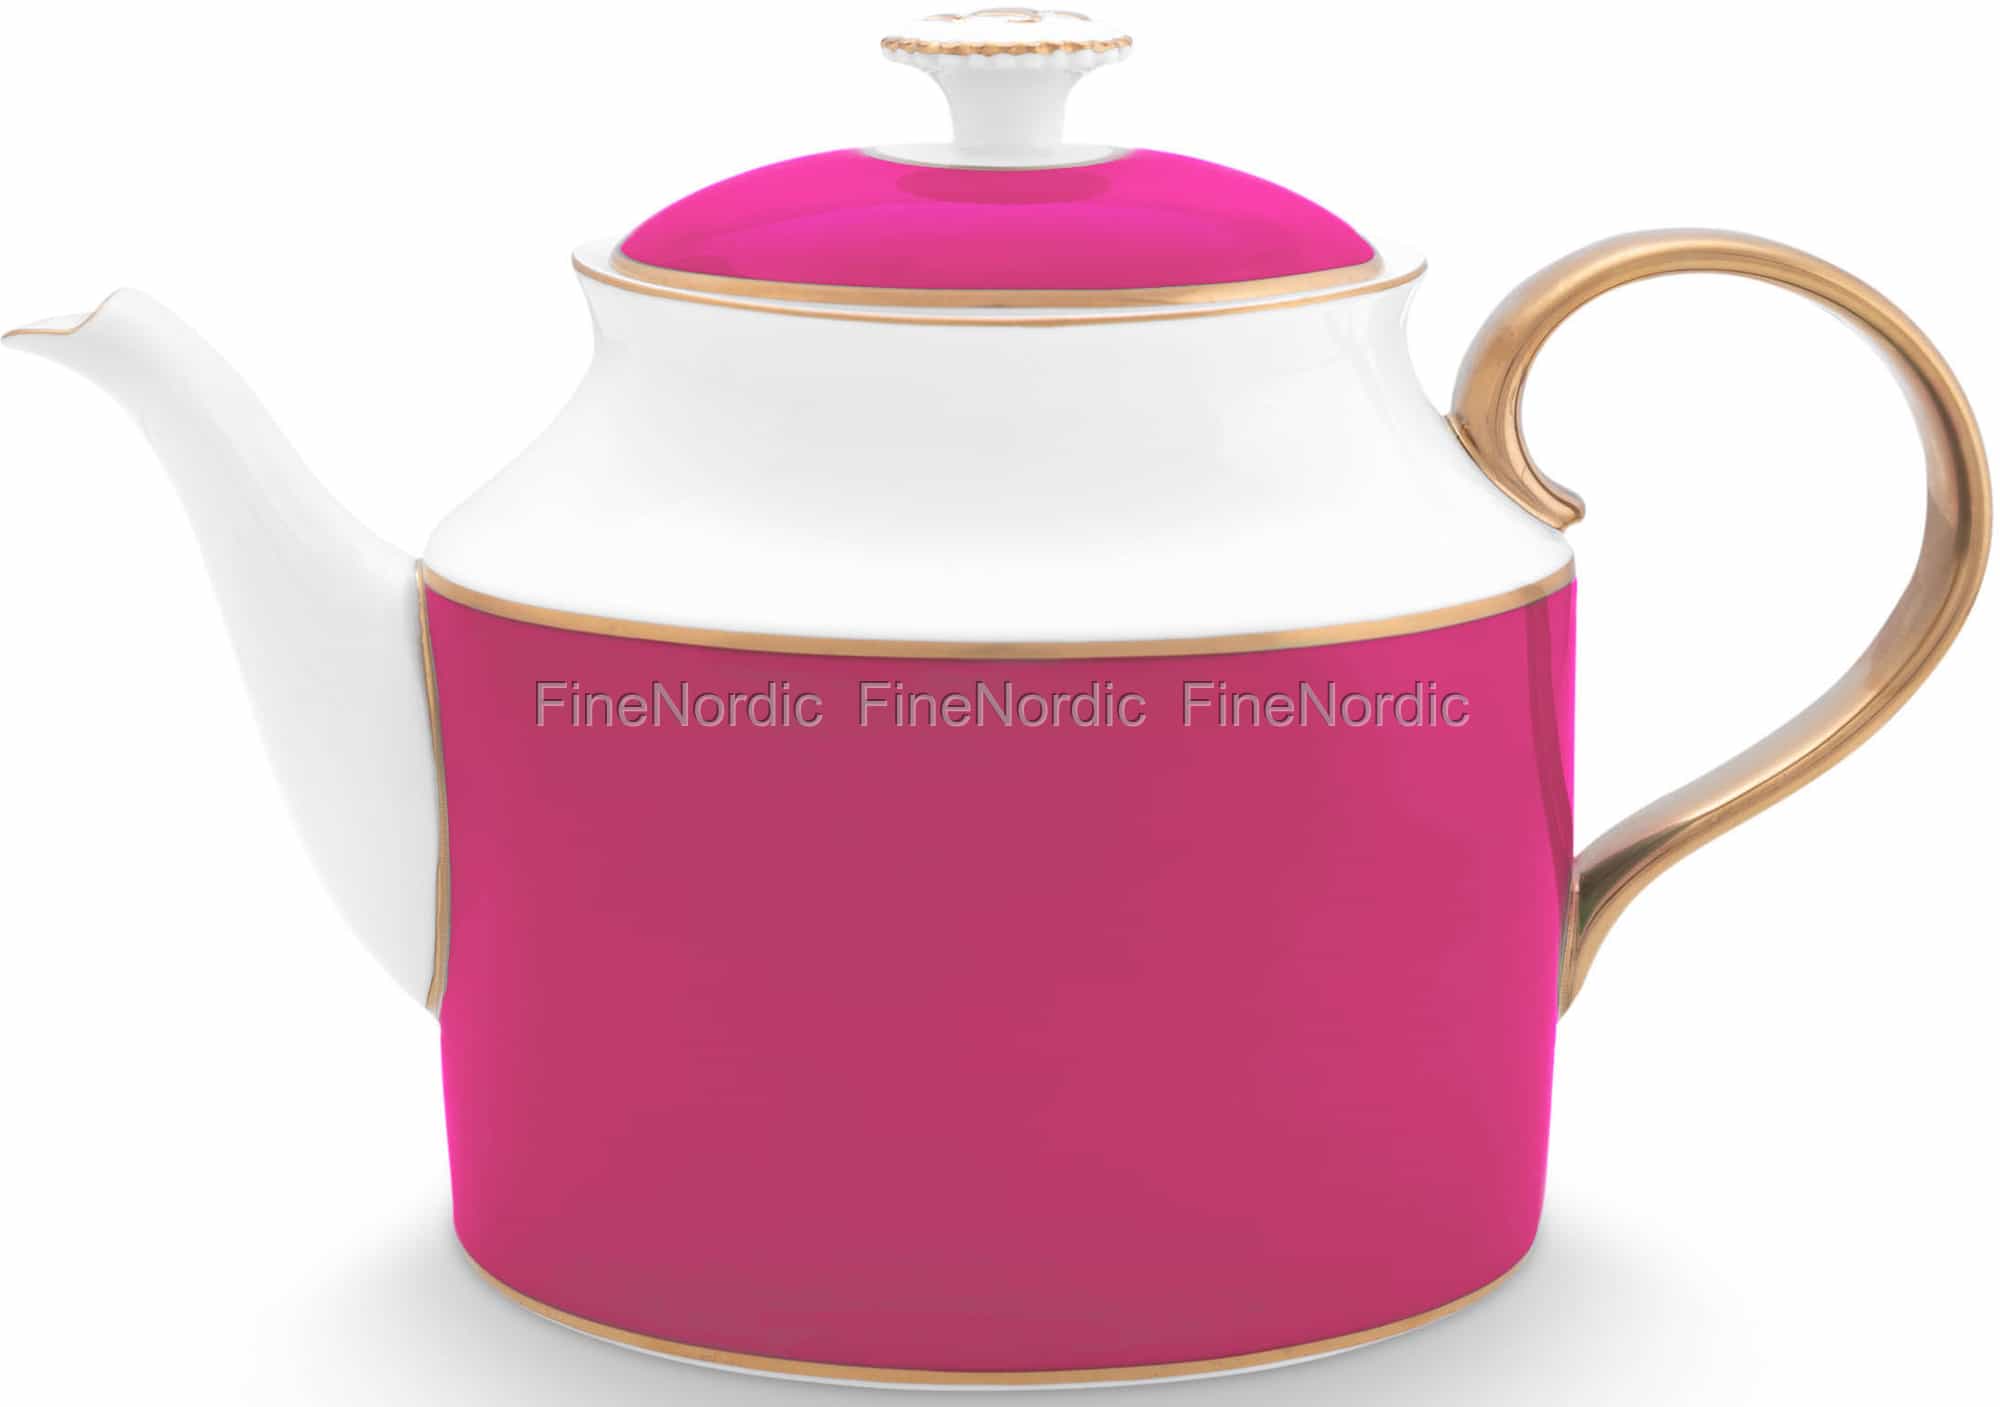 Midi Induction Based Teapot Set Rose - 14x14 - Pink Teapots